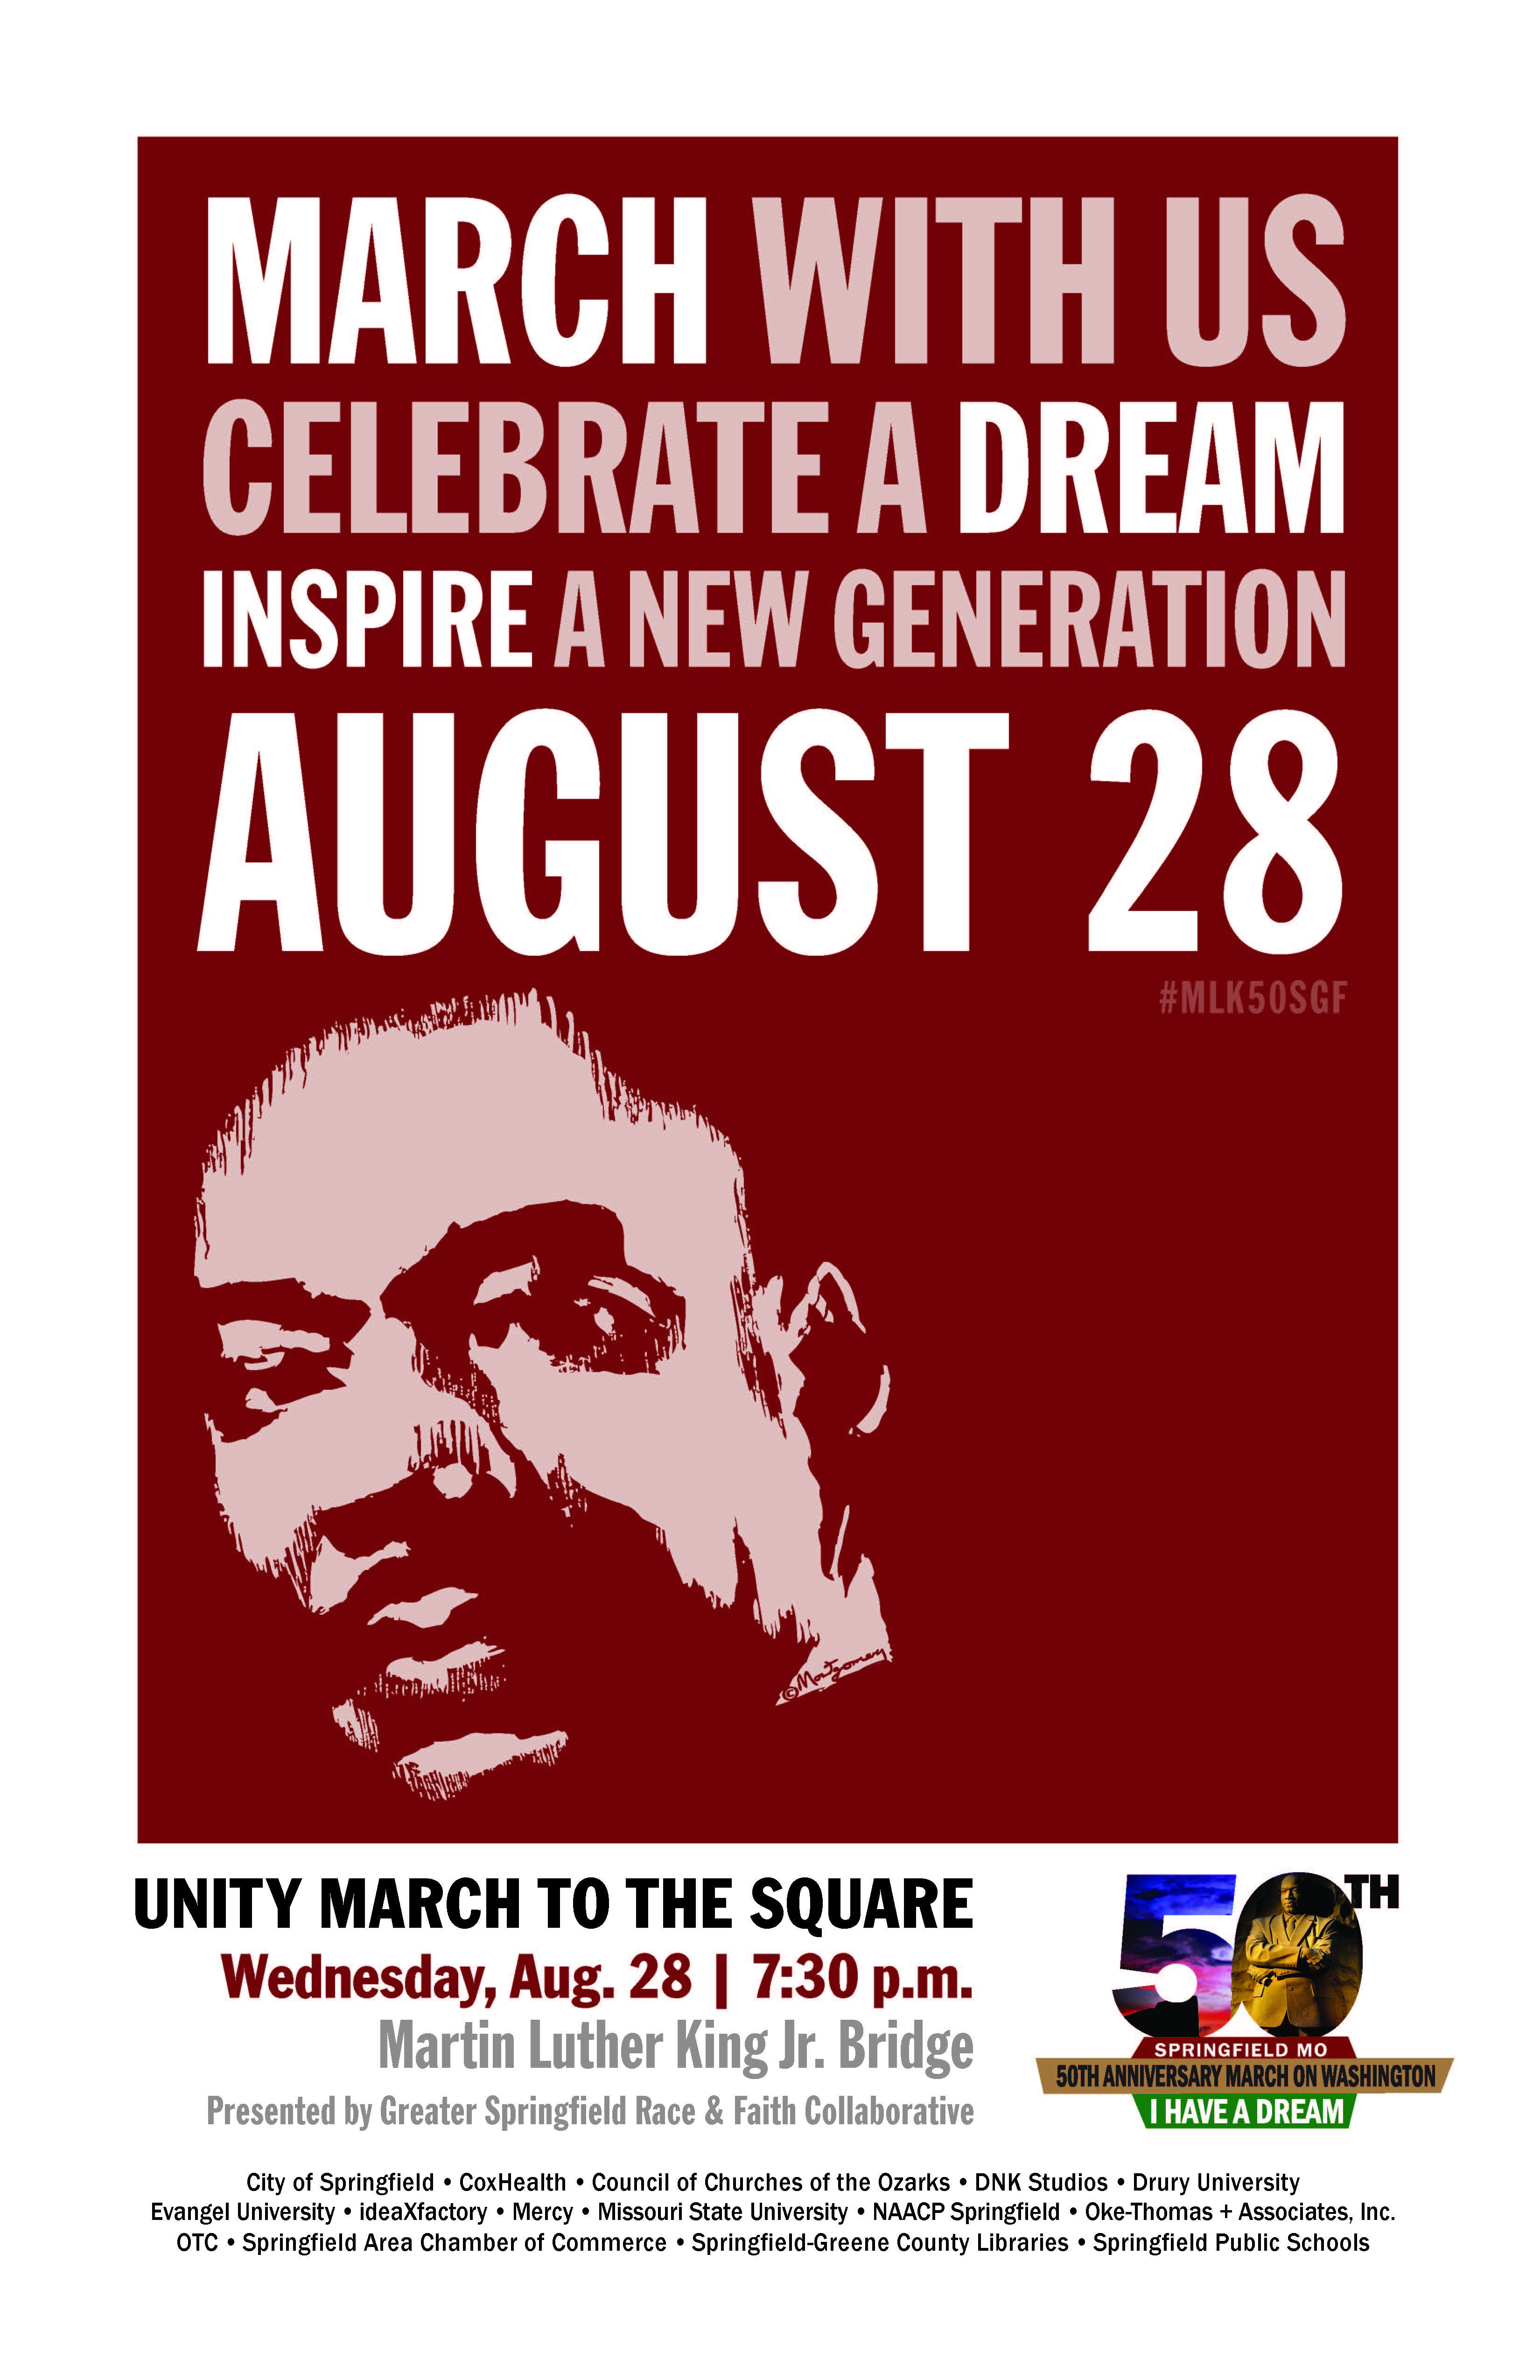 MLK 50th Anniversary Unity March3300 x 5100